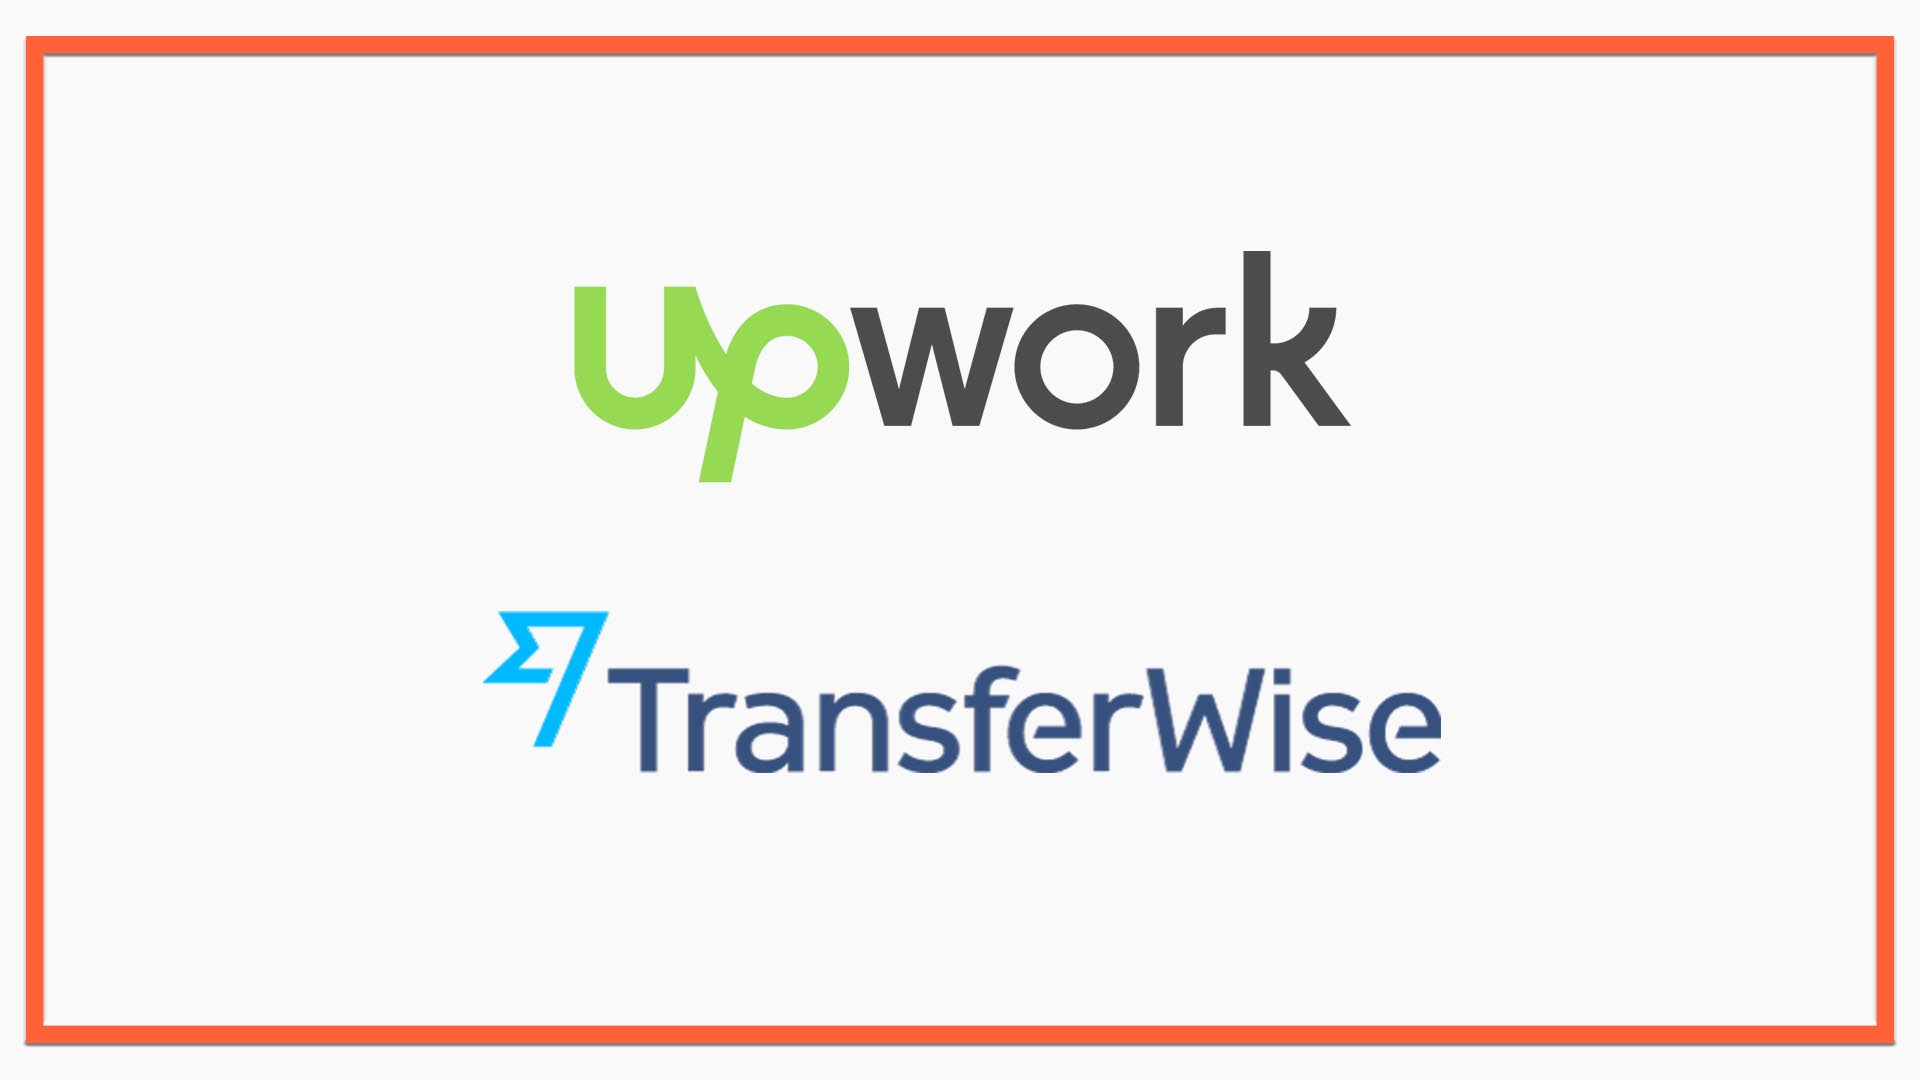 TransferWise_UpWork_logo